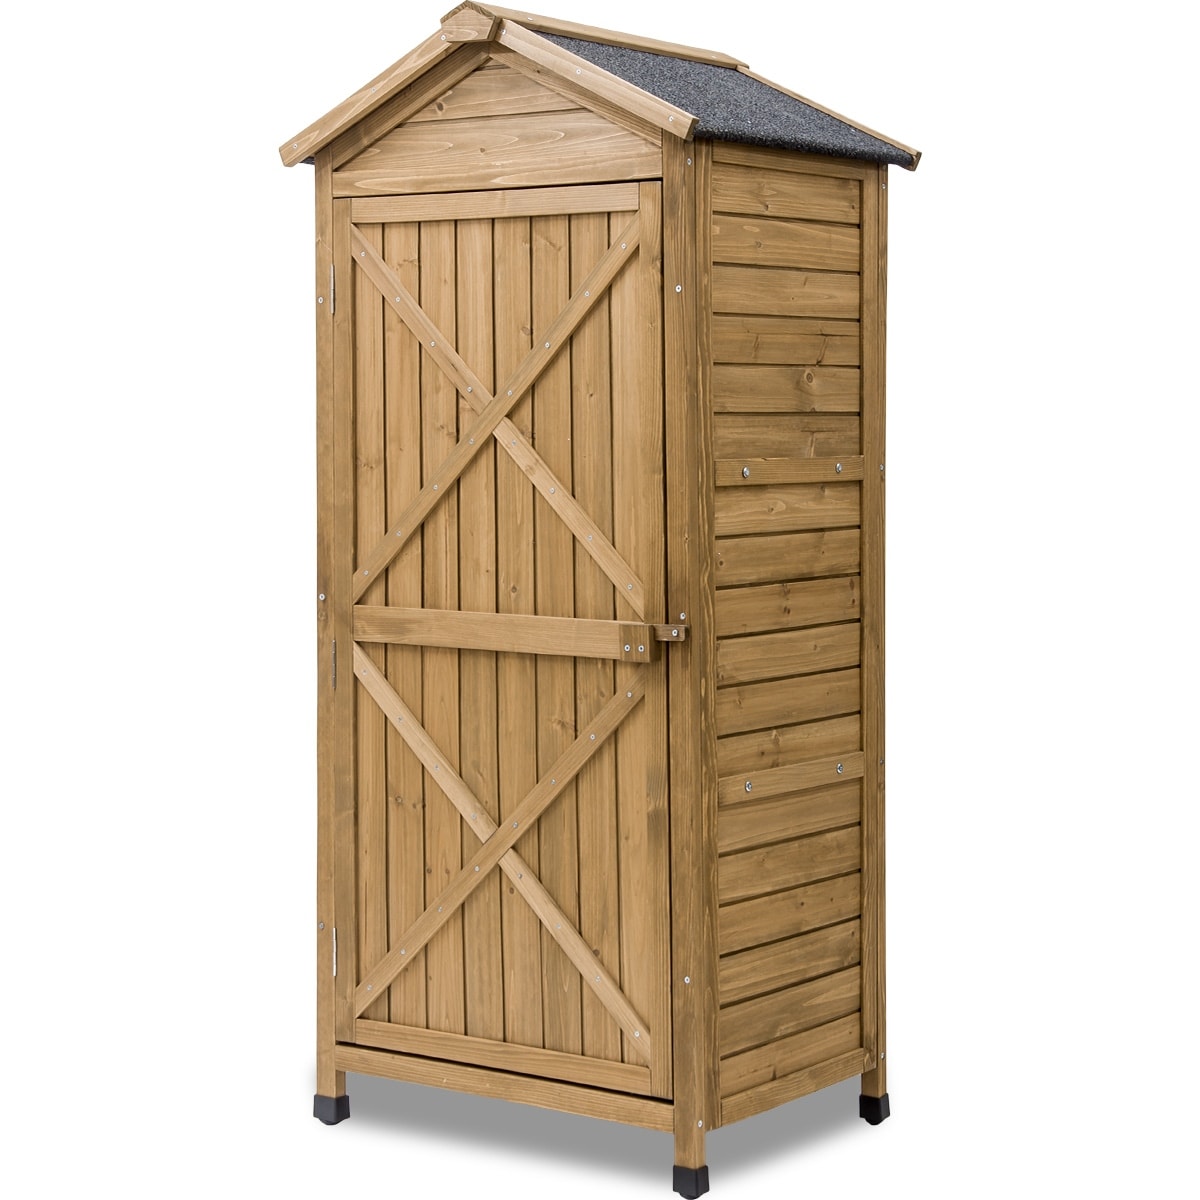 Kahomvis Fir Wood Outdoor Storage Cabinet Garden Shed with Waterproof Asphalt Roof